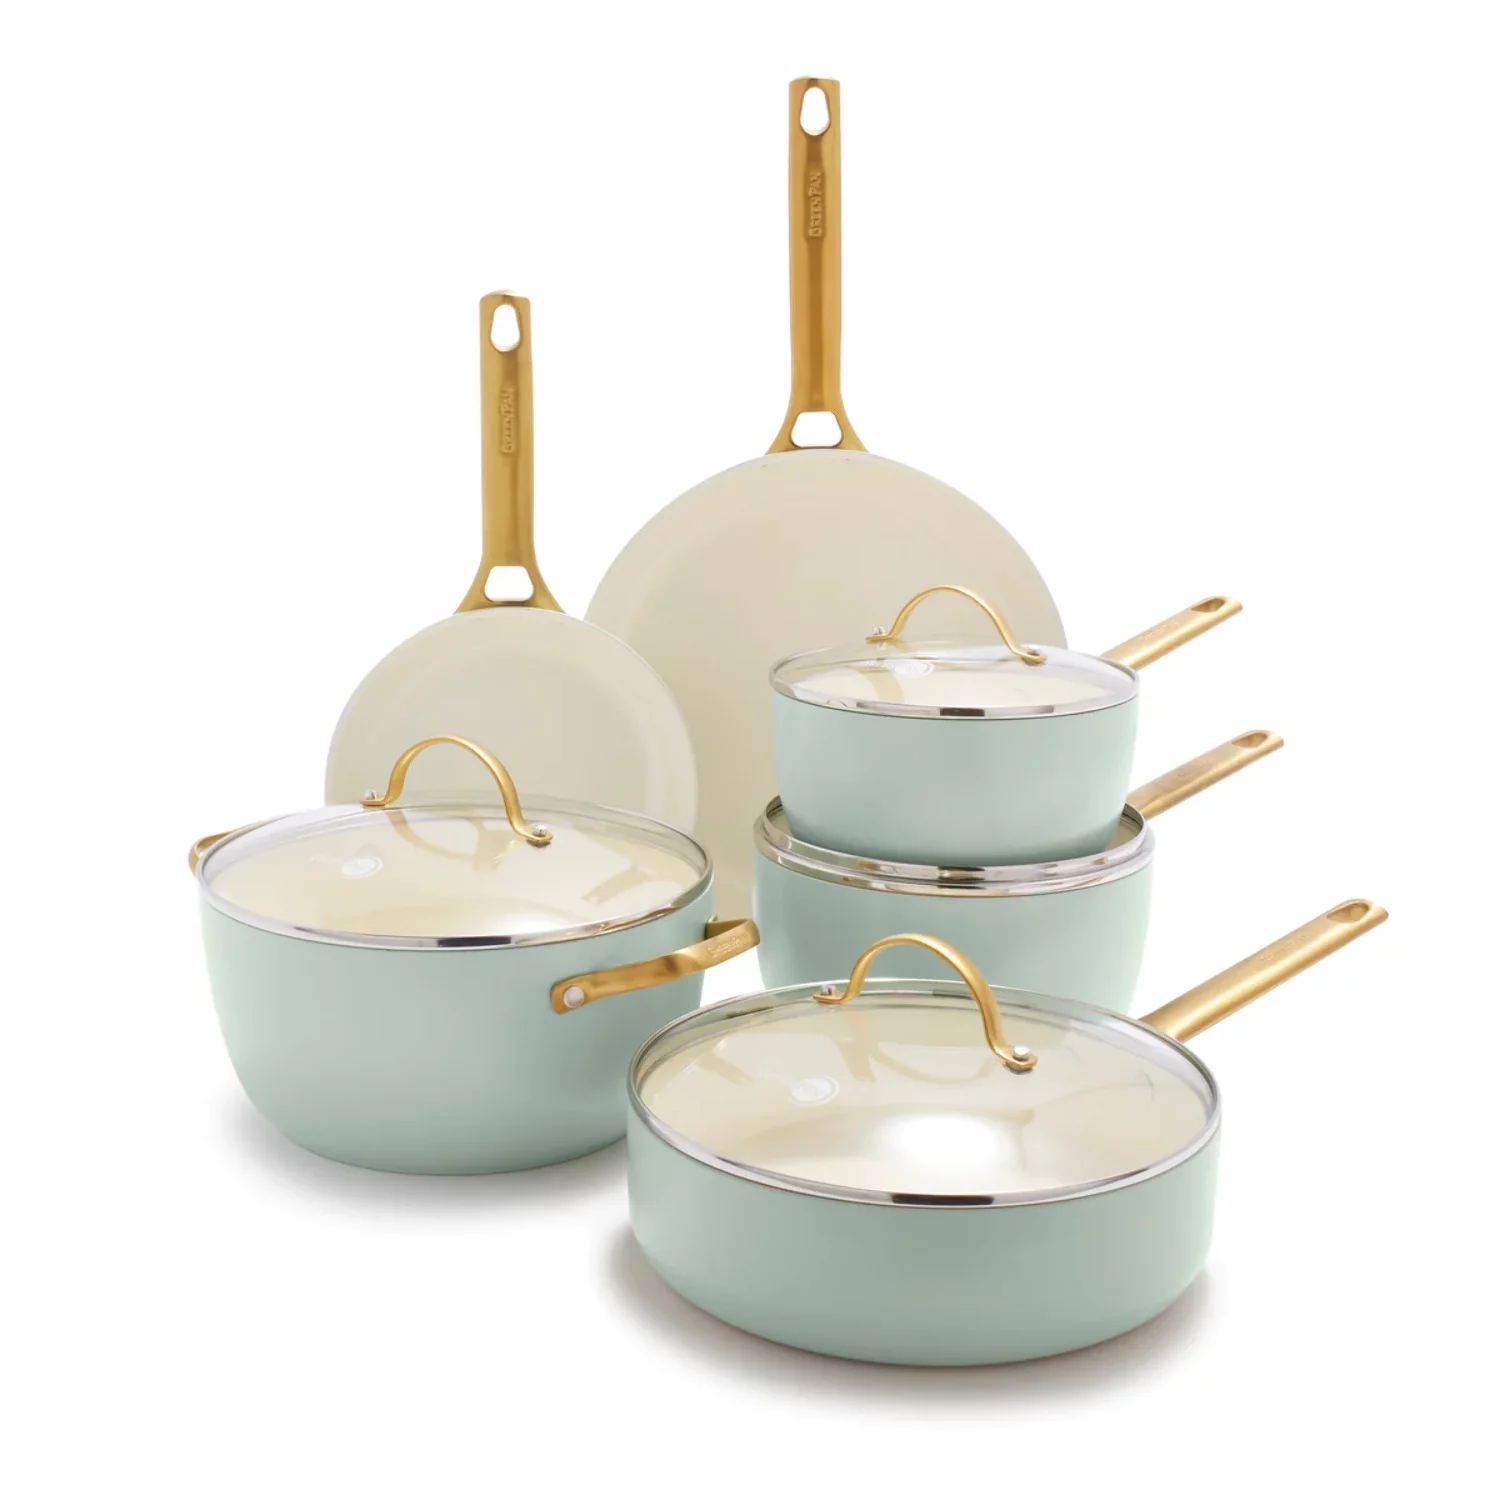 GreenPan Reserve Ceramic Nonstick 10-Piece Cookware Set | Julep with Gold-Tone Handles